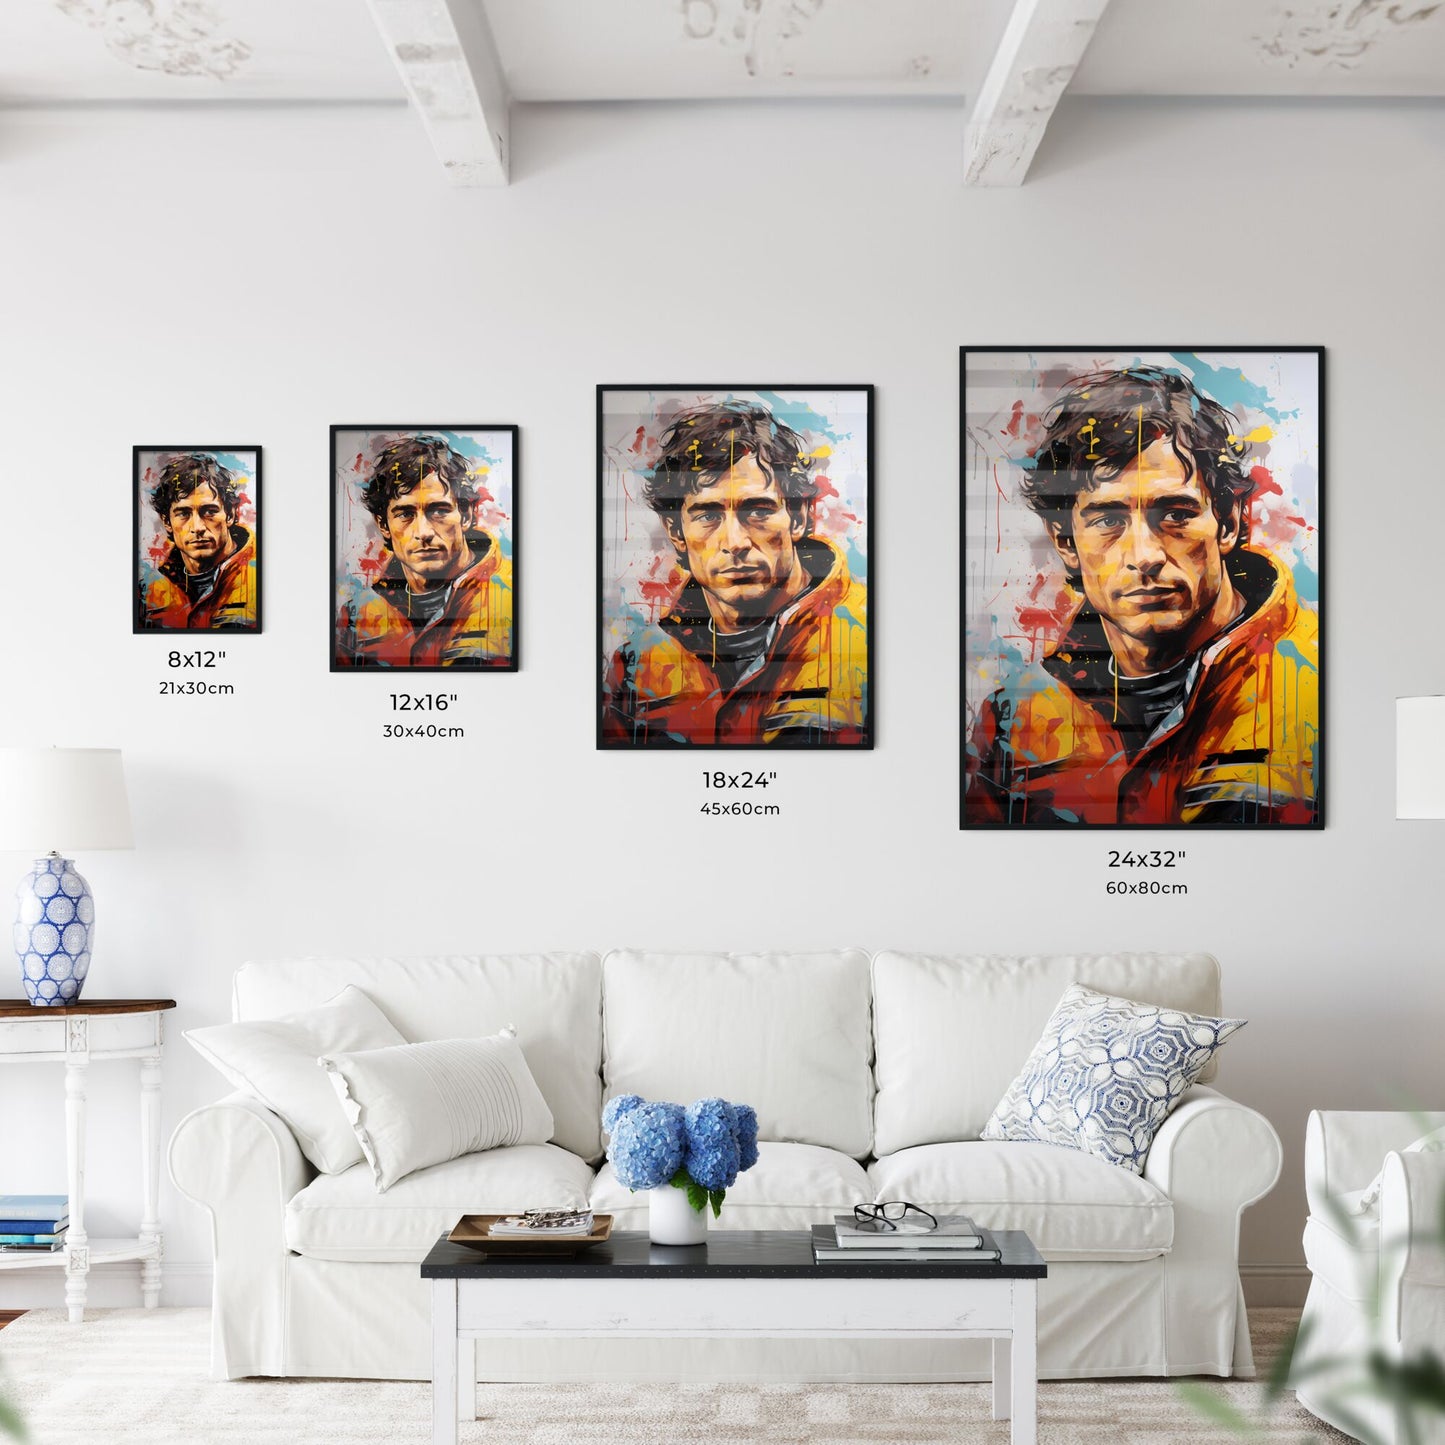 Aryton Senna - A Painting Of A Man Default Title